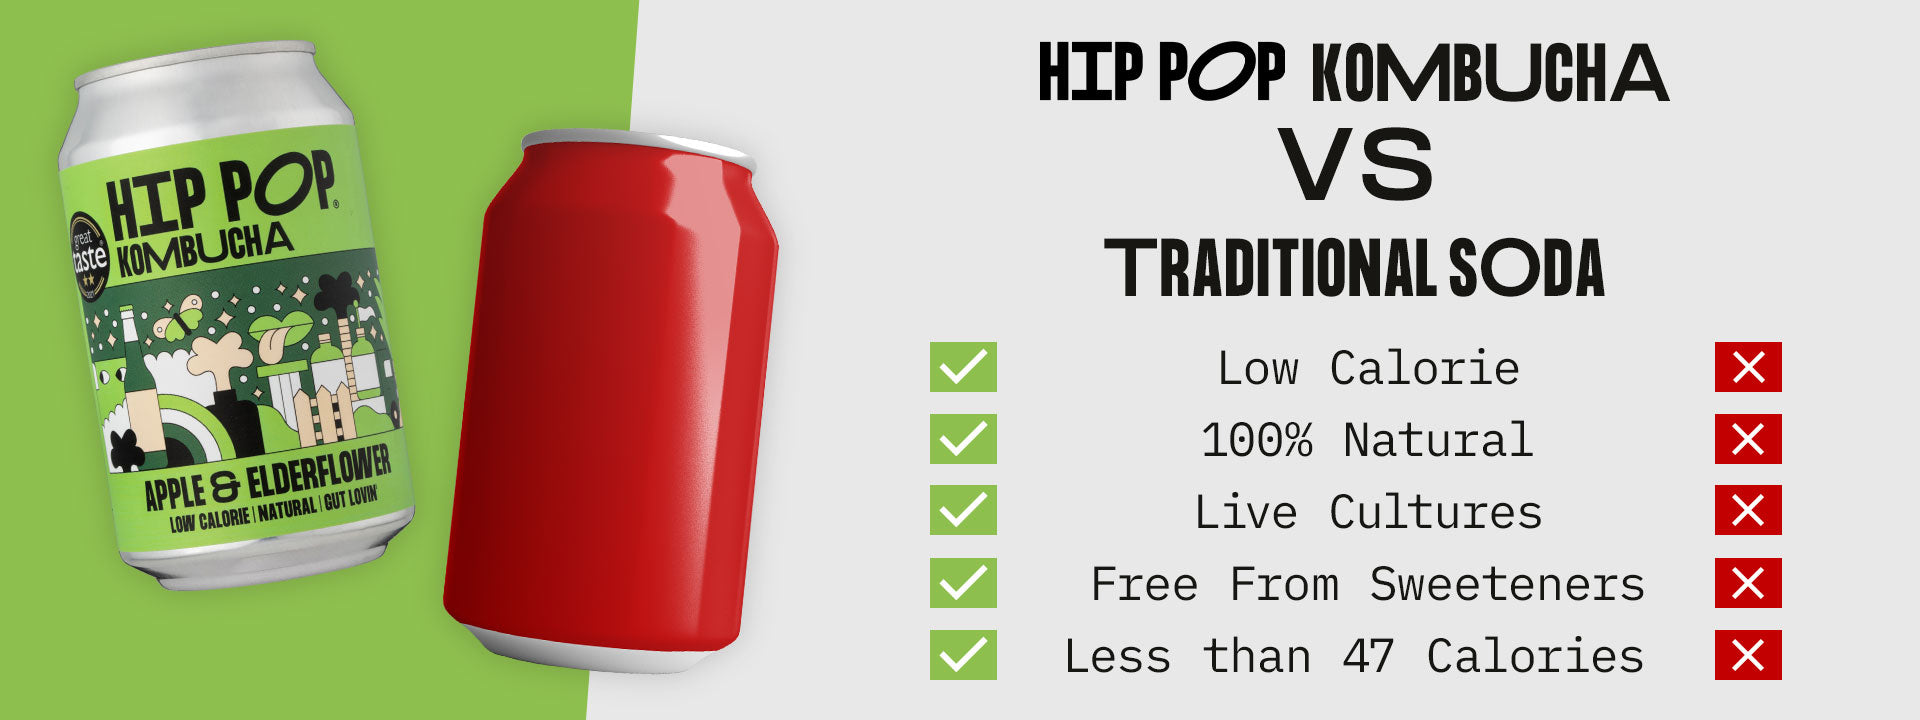 Hip Pop Kombucha vs Traditional Soda Comparison Table